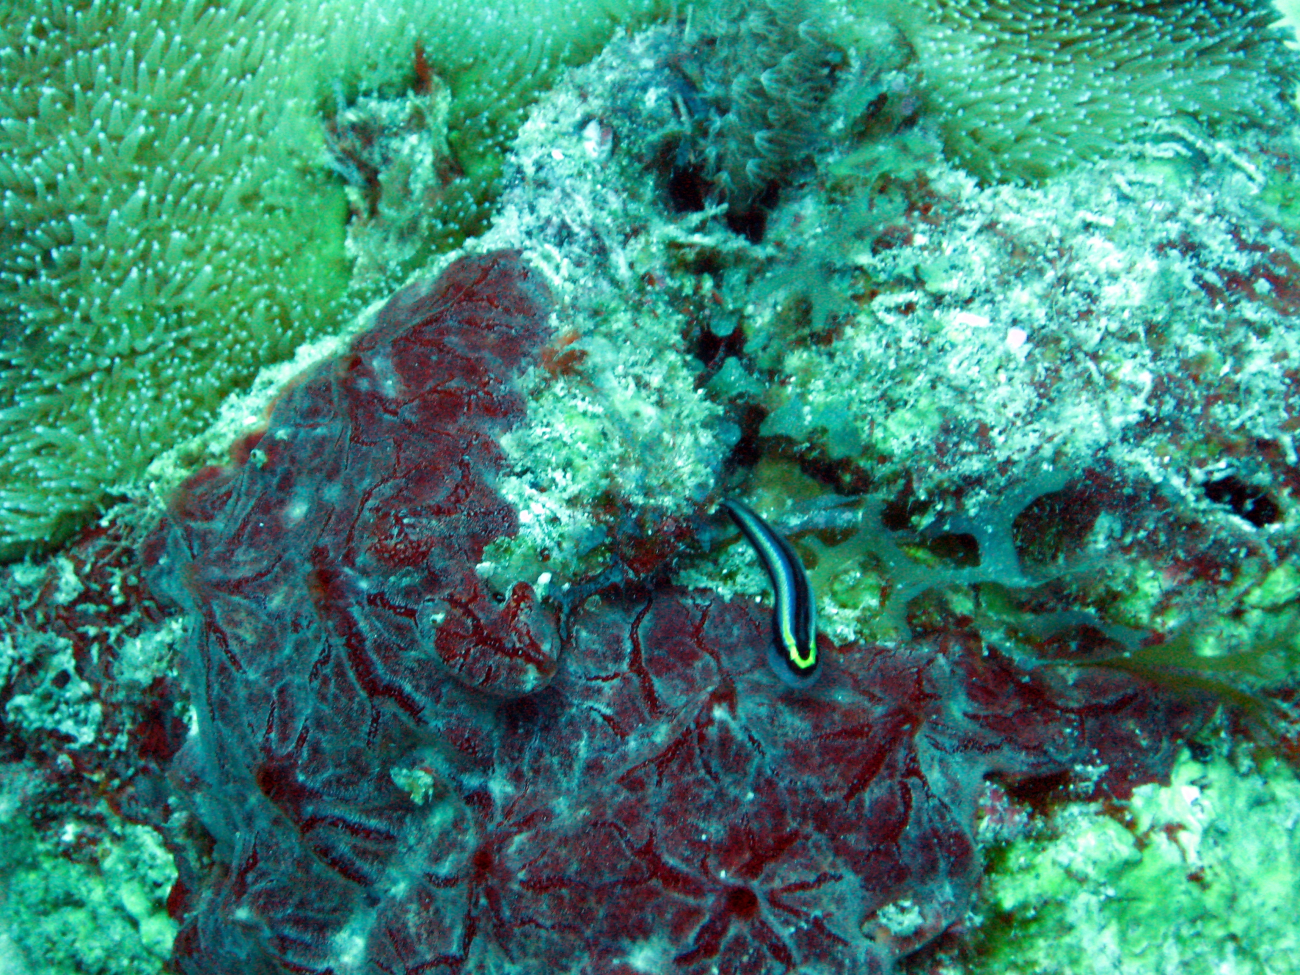 A sharknose goby over a red encrusting sponge (Porifera spp)